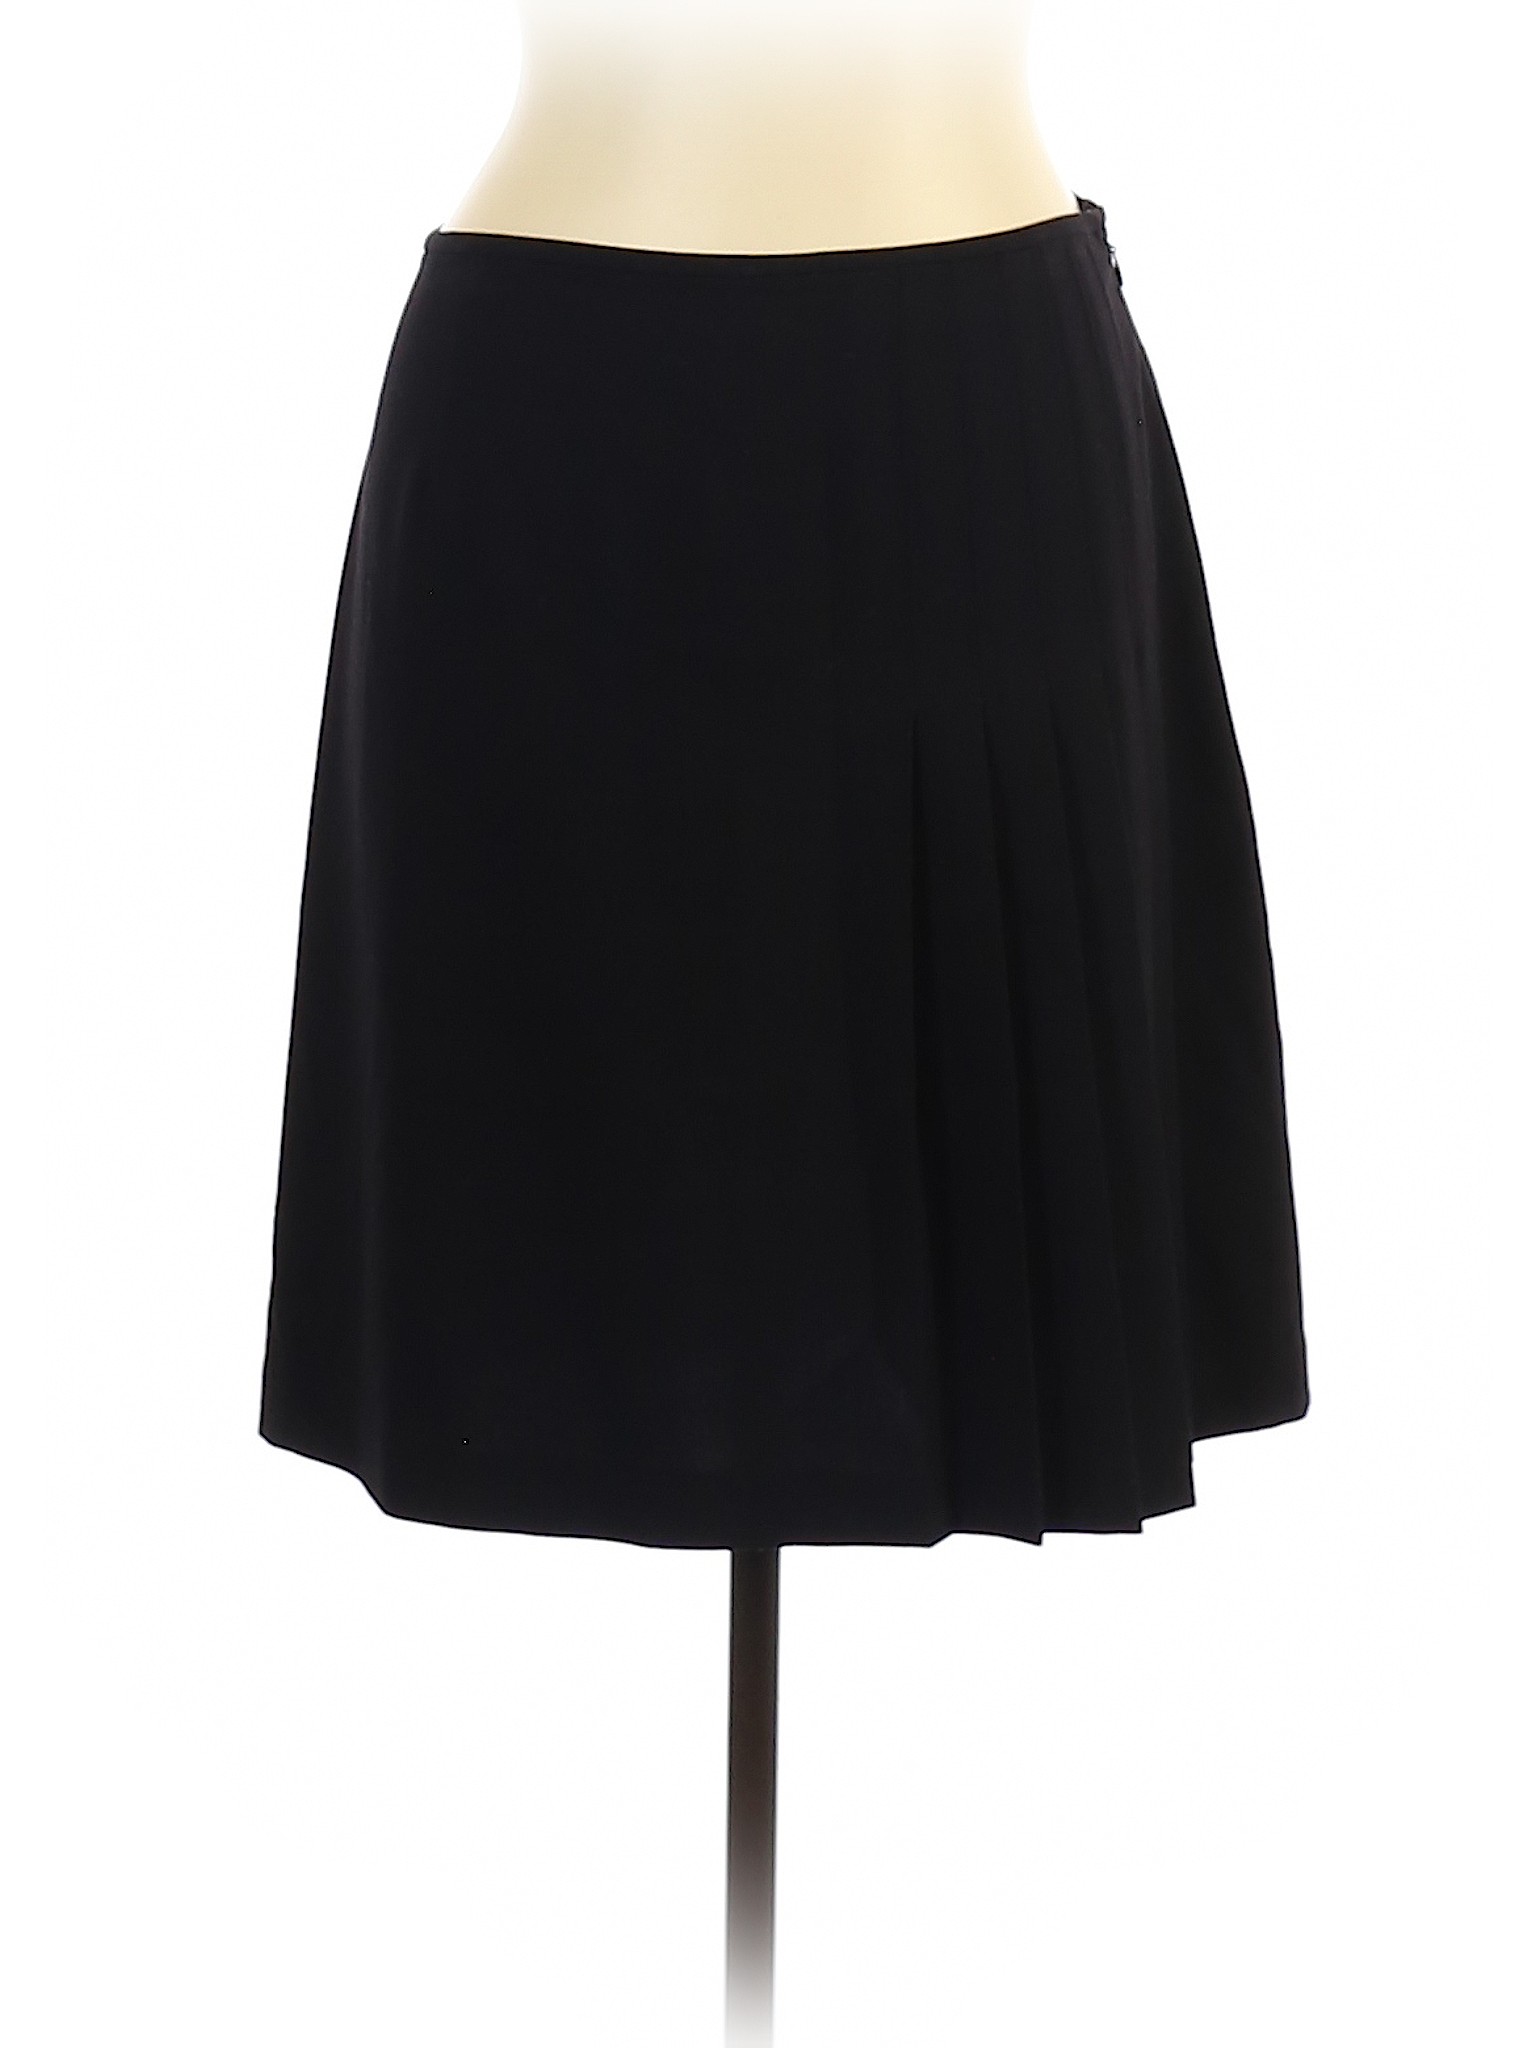 Apt. 9 Women Black Casual Skirt 10 Petites | eBay